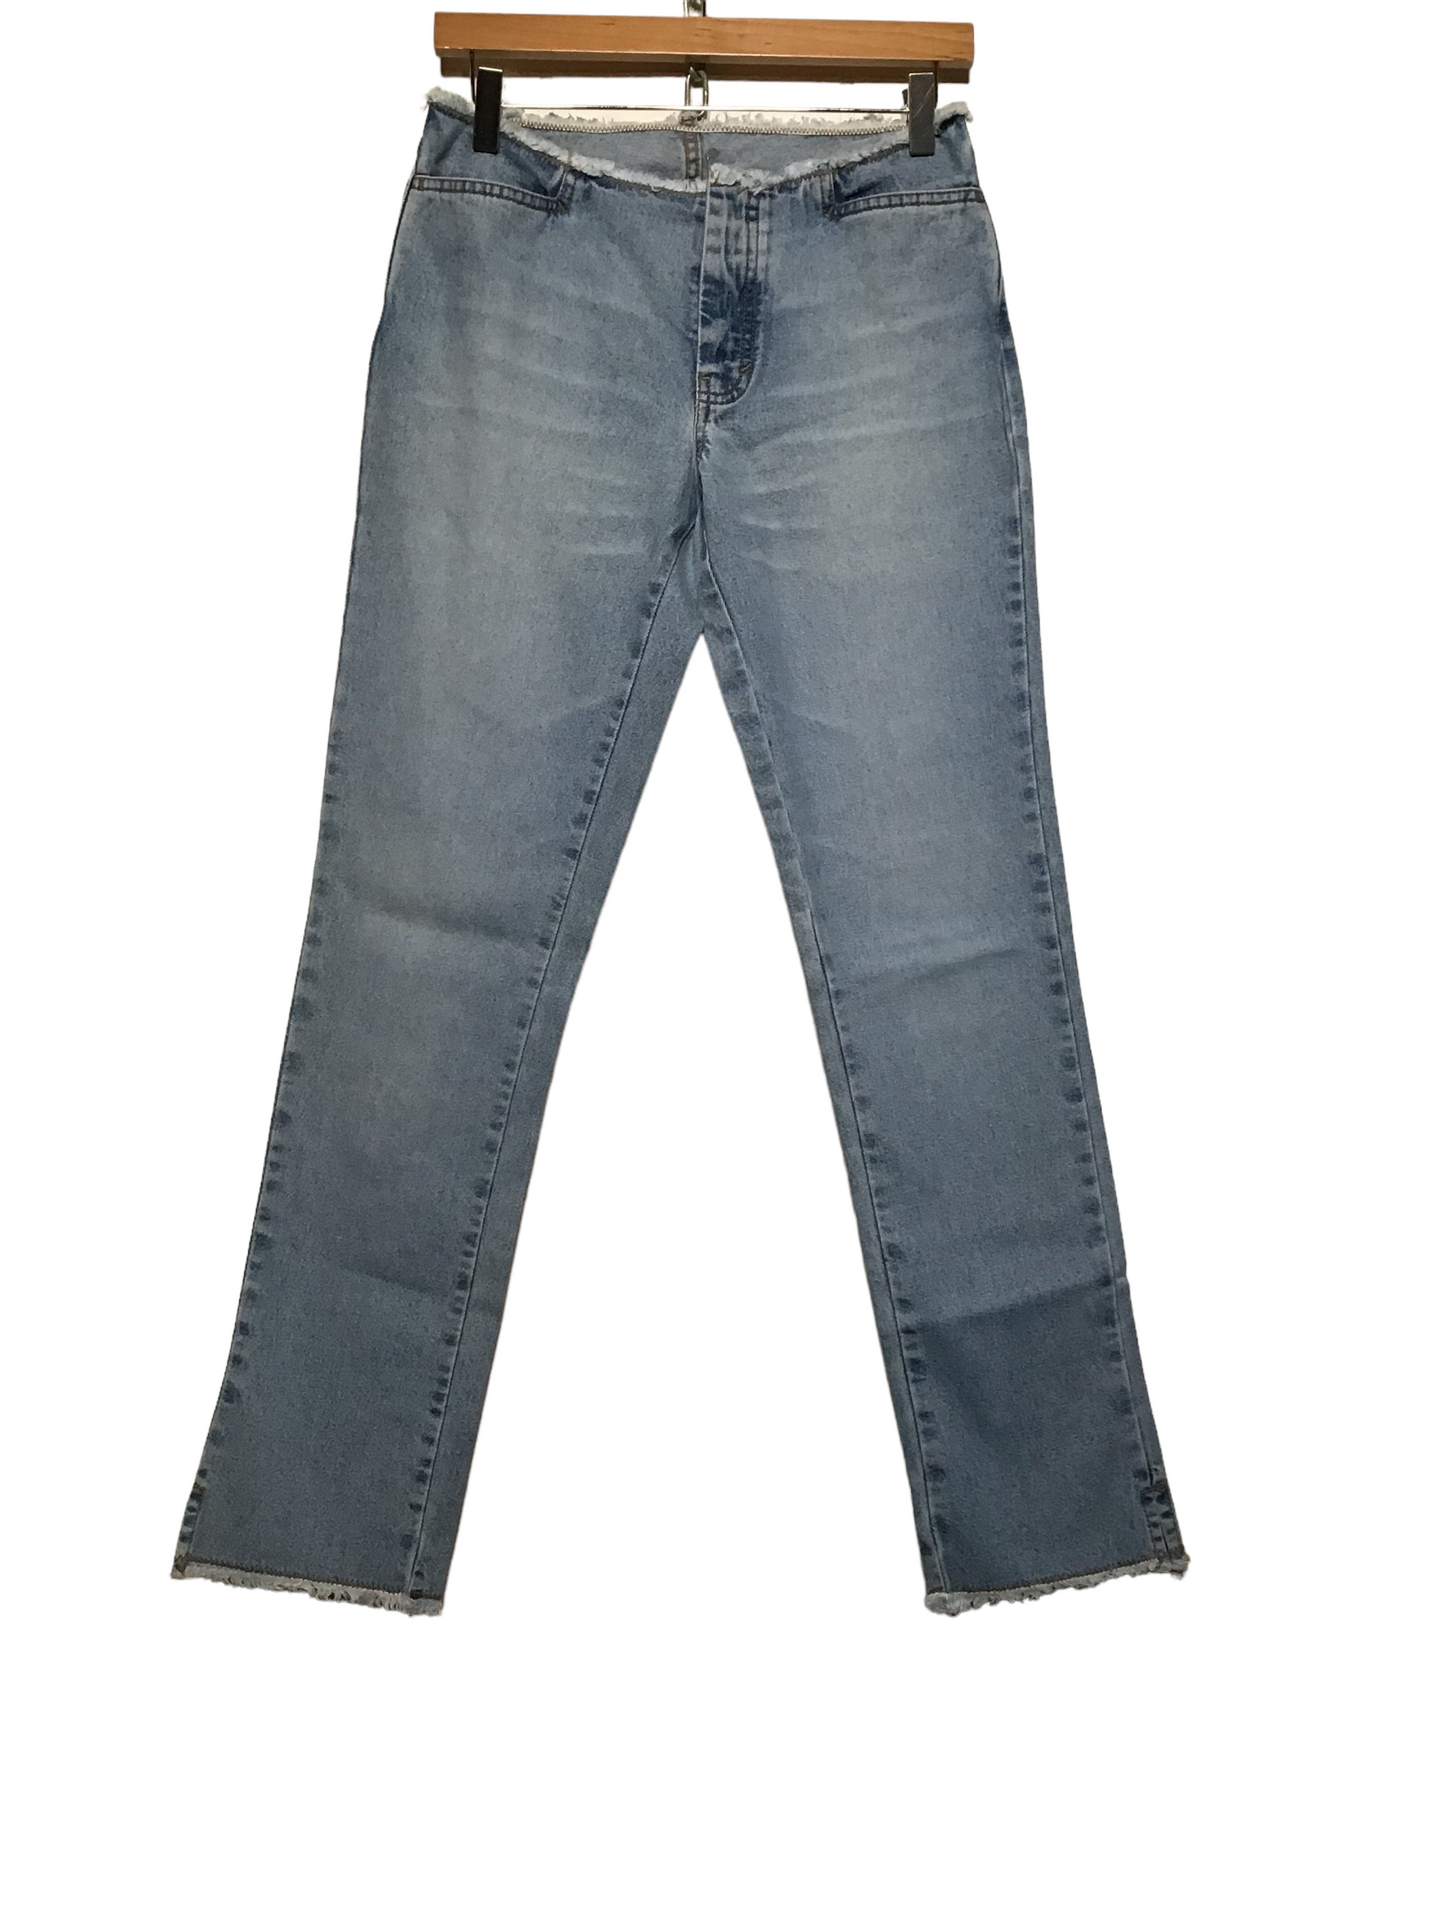 Cut Off Jeans (28X30)